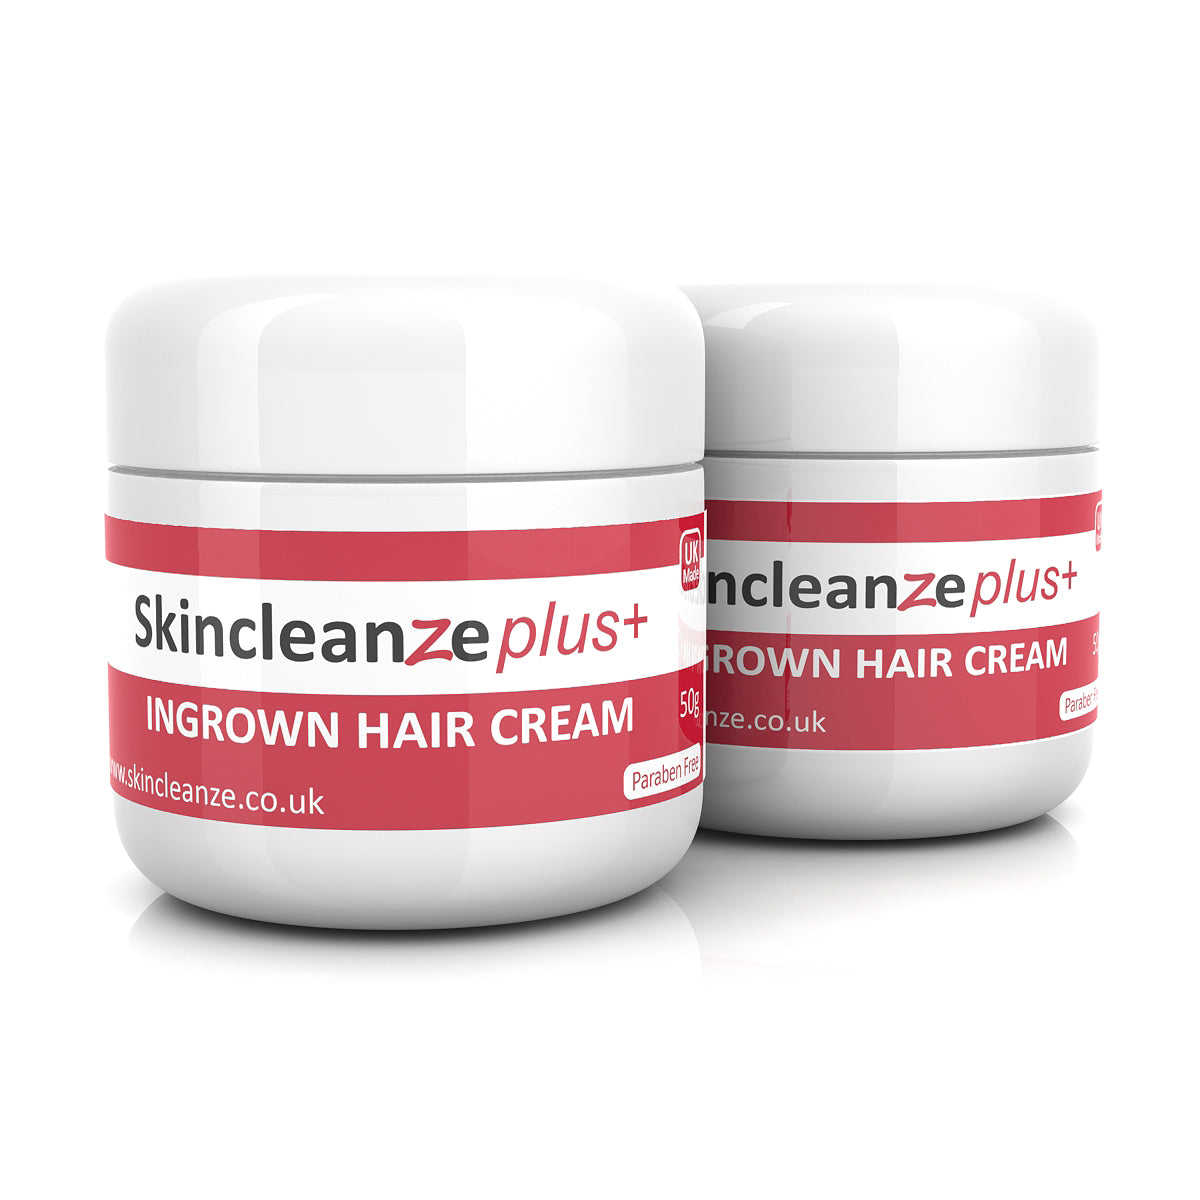 Skincleanze plus+ Ingrown Hair Cream Double Strength (Pack of 2x 50g)